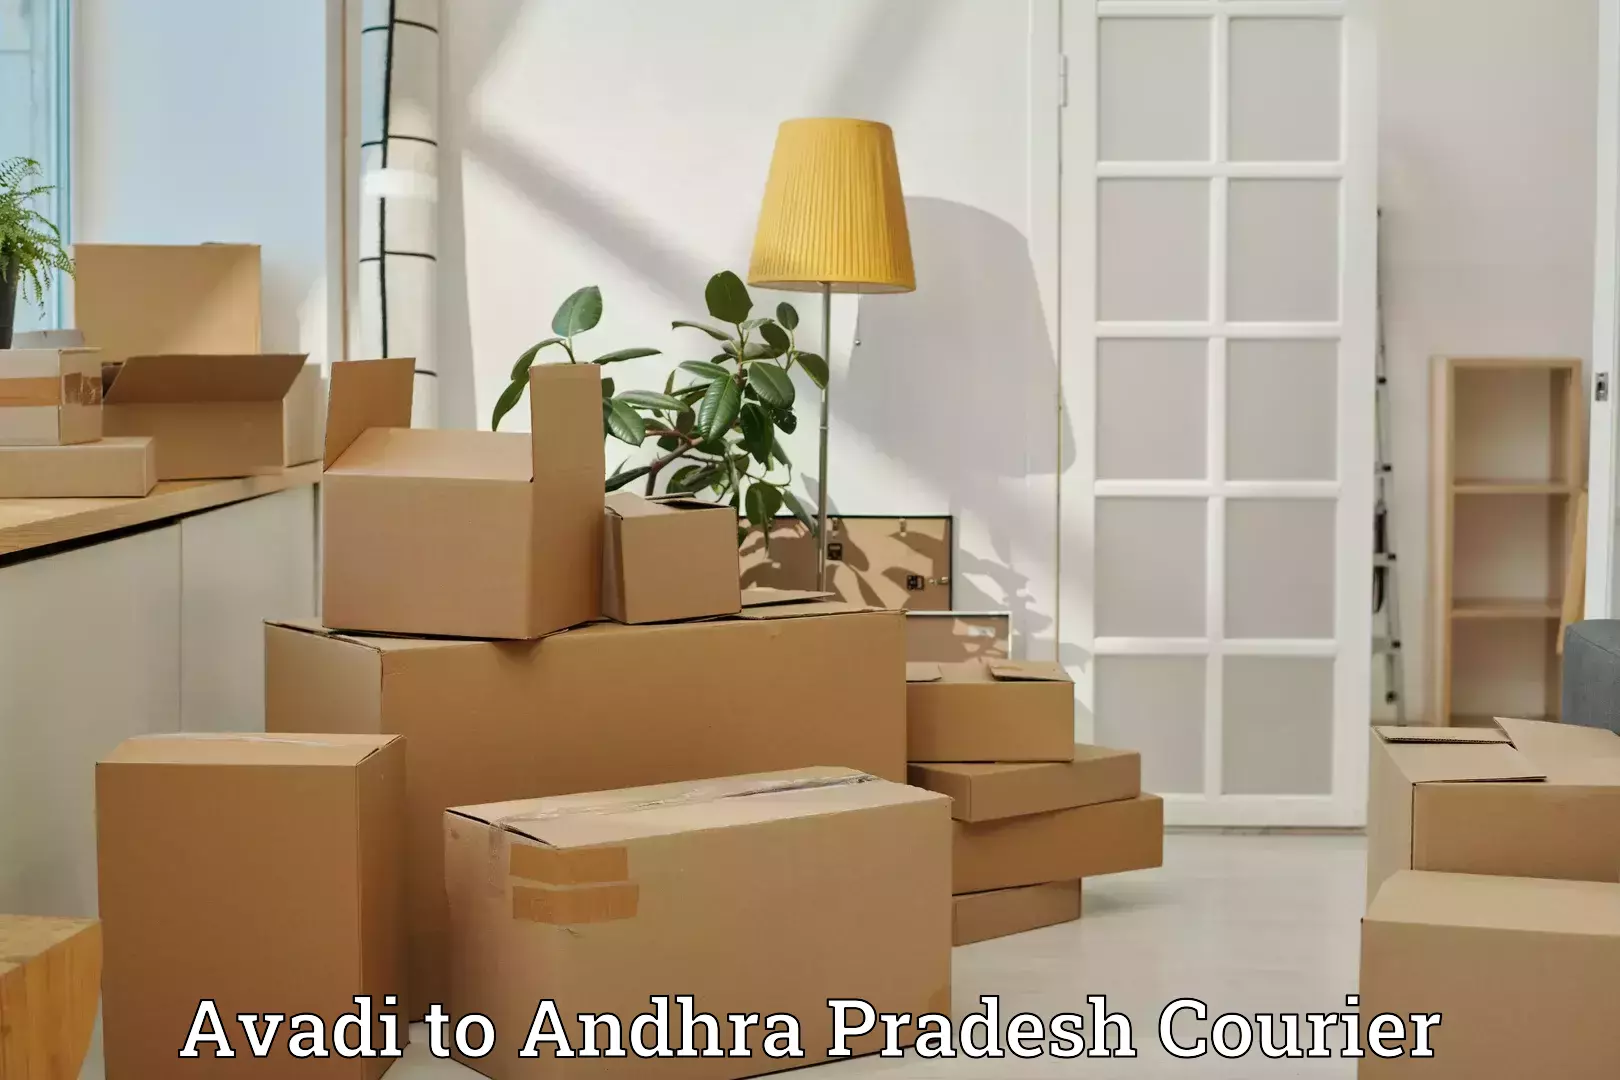 Door-to-door baggage service Avadi to Andhra Pradesh